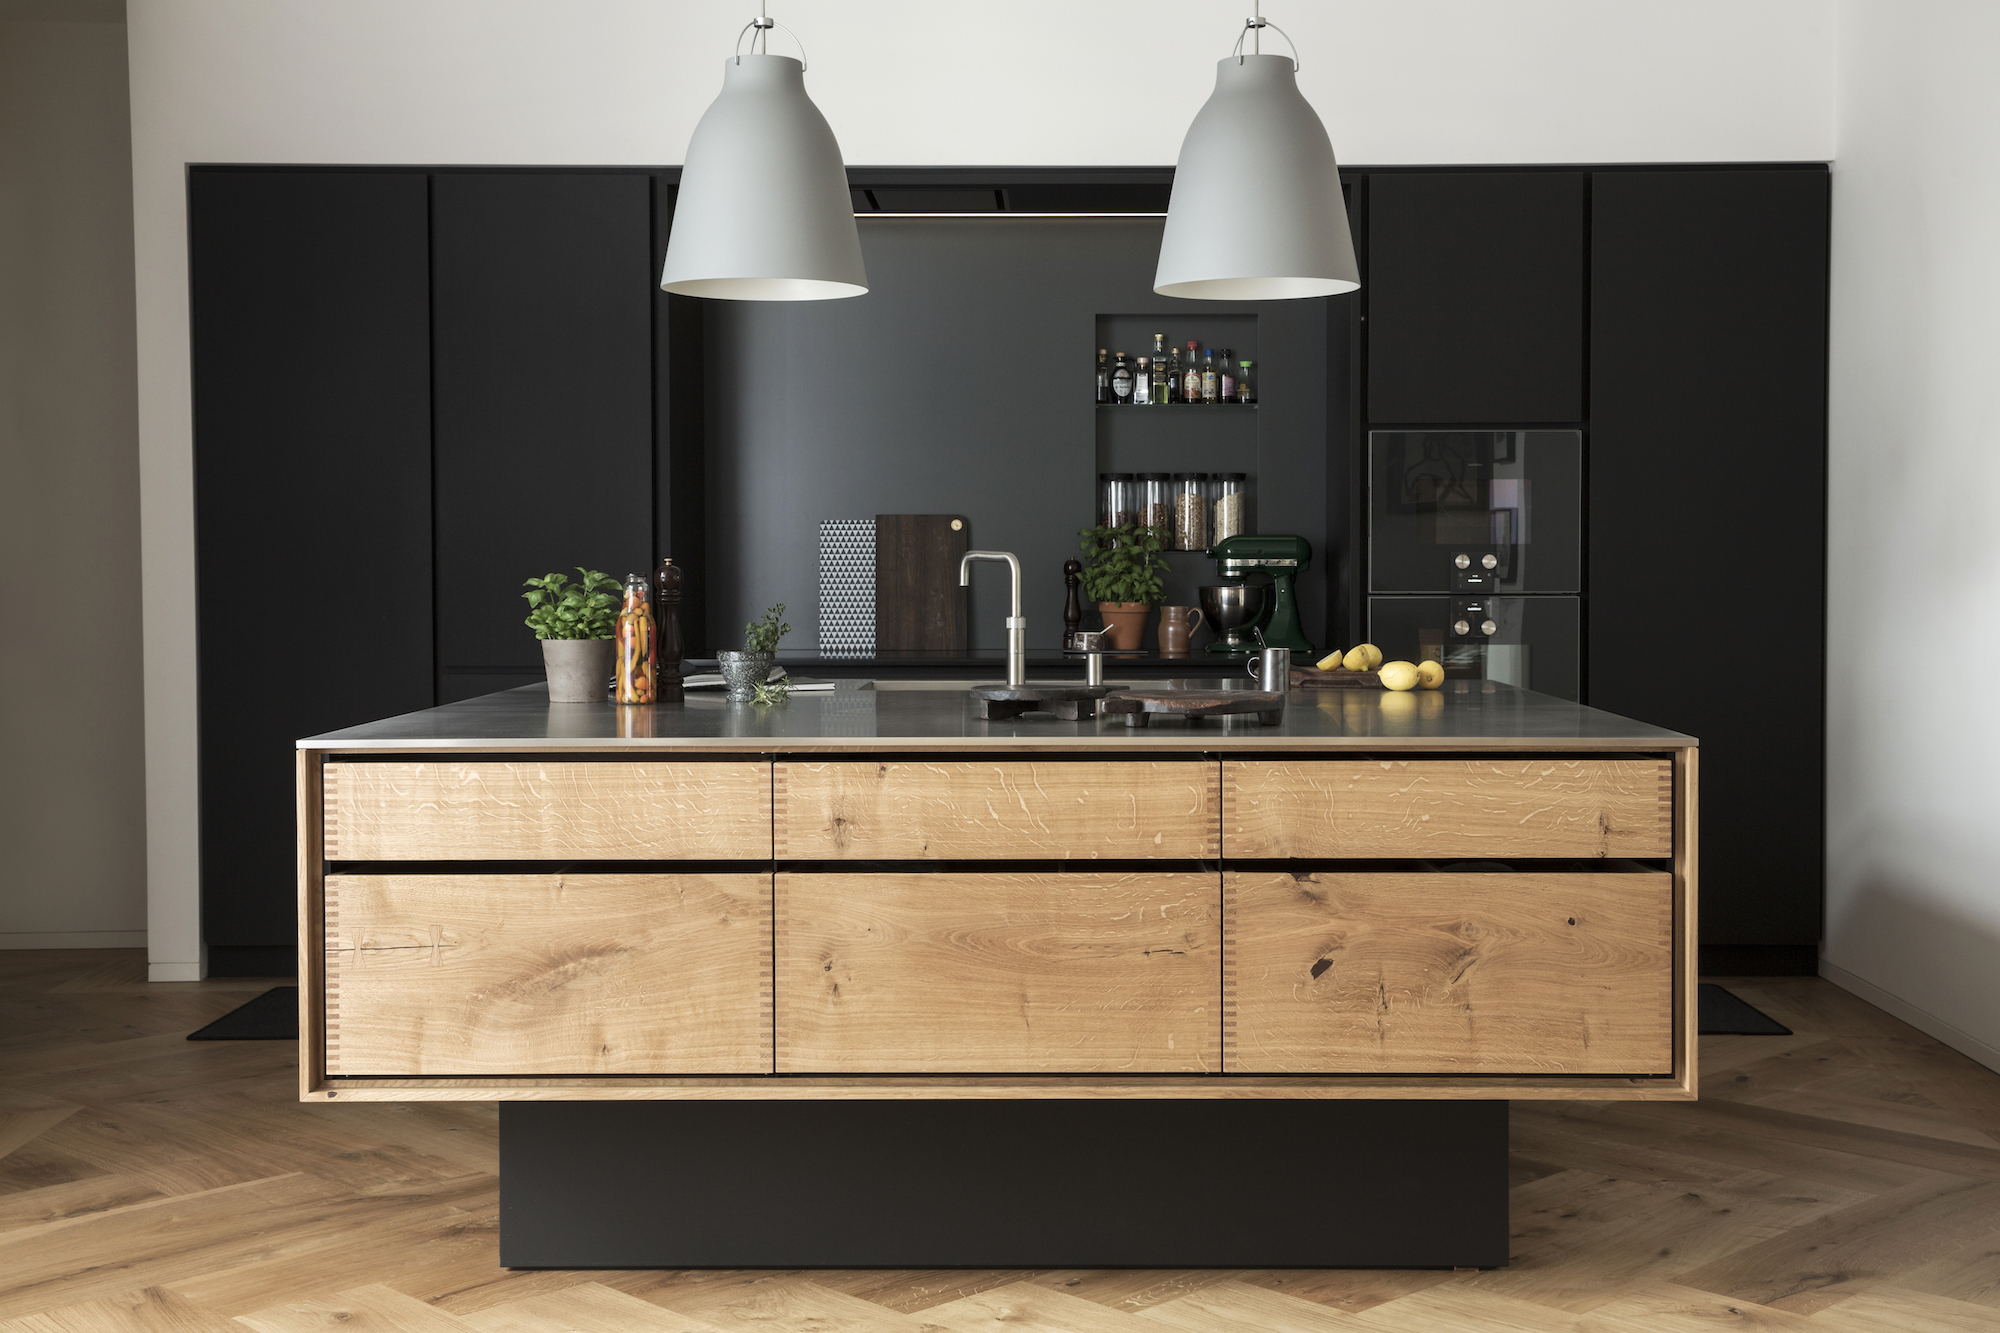 wood-island-kitchen-gray-pendant-lights-black-backsplash-denmark-garde-Hvalsoe